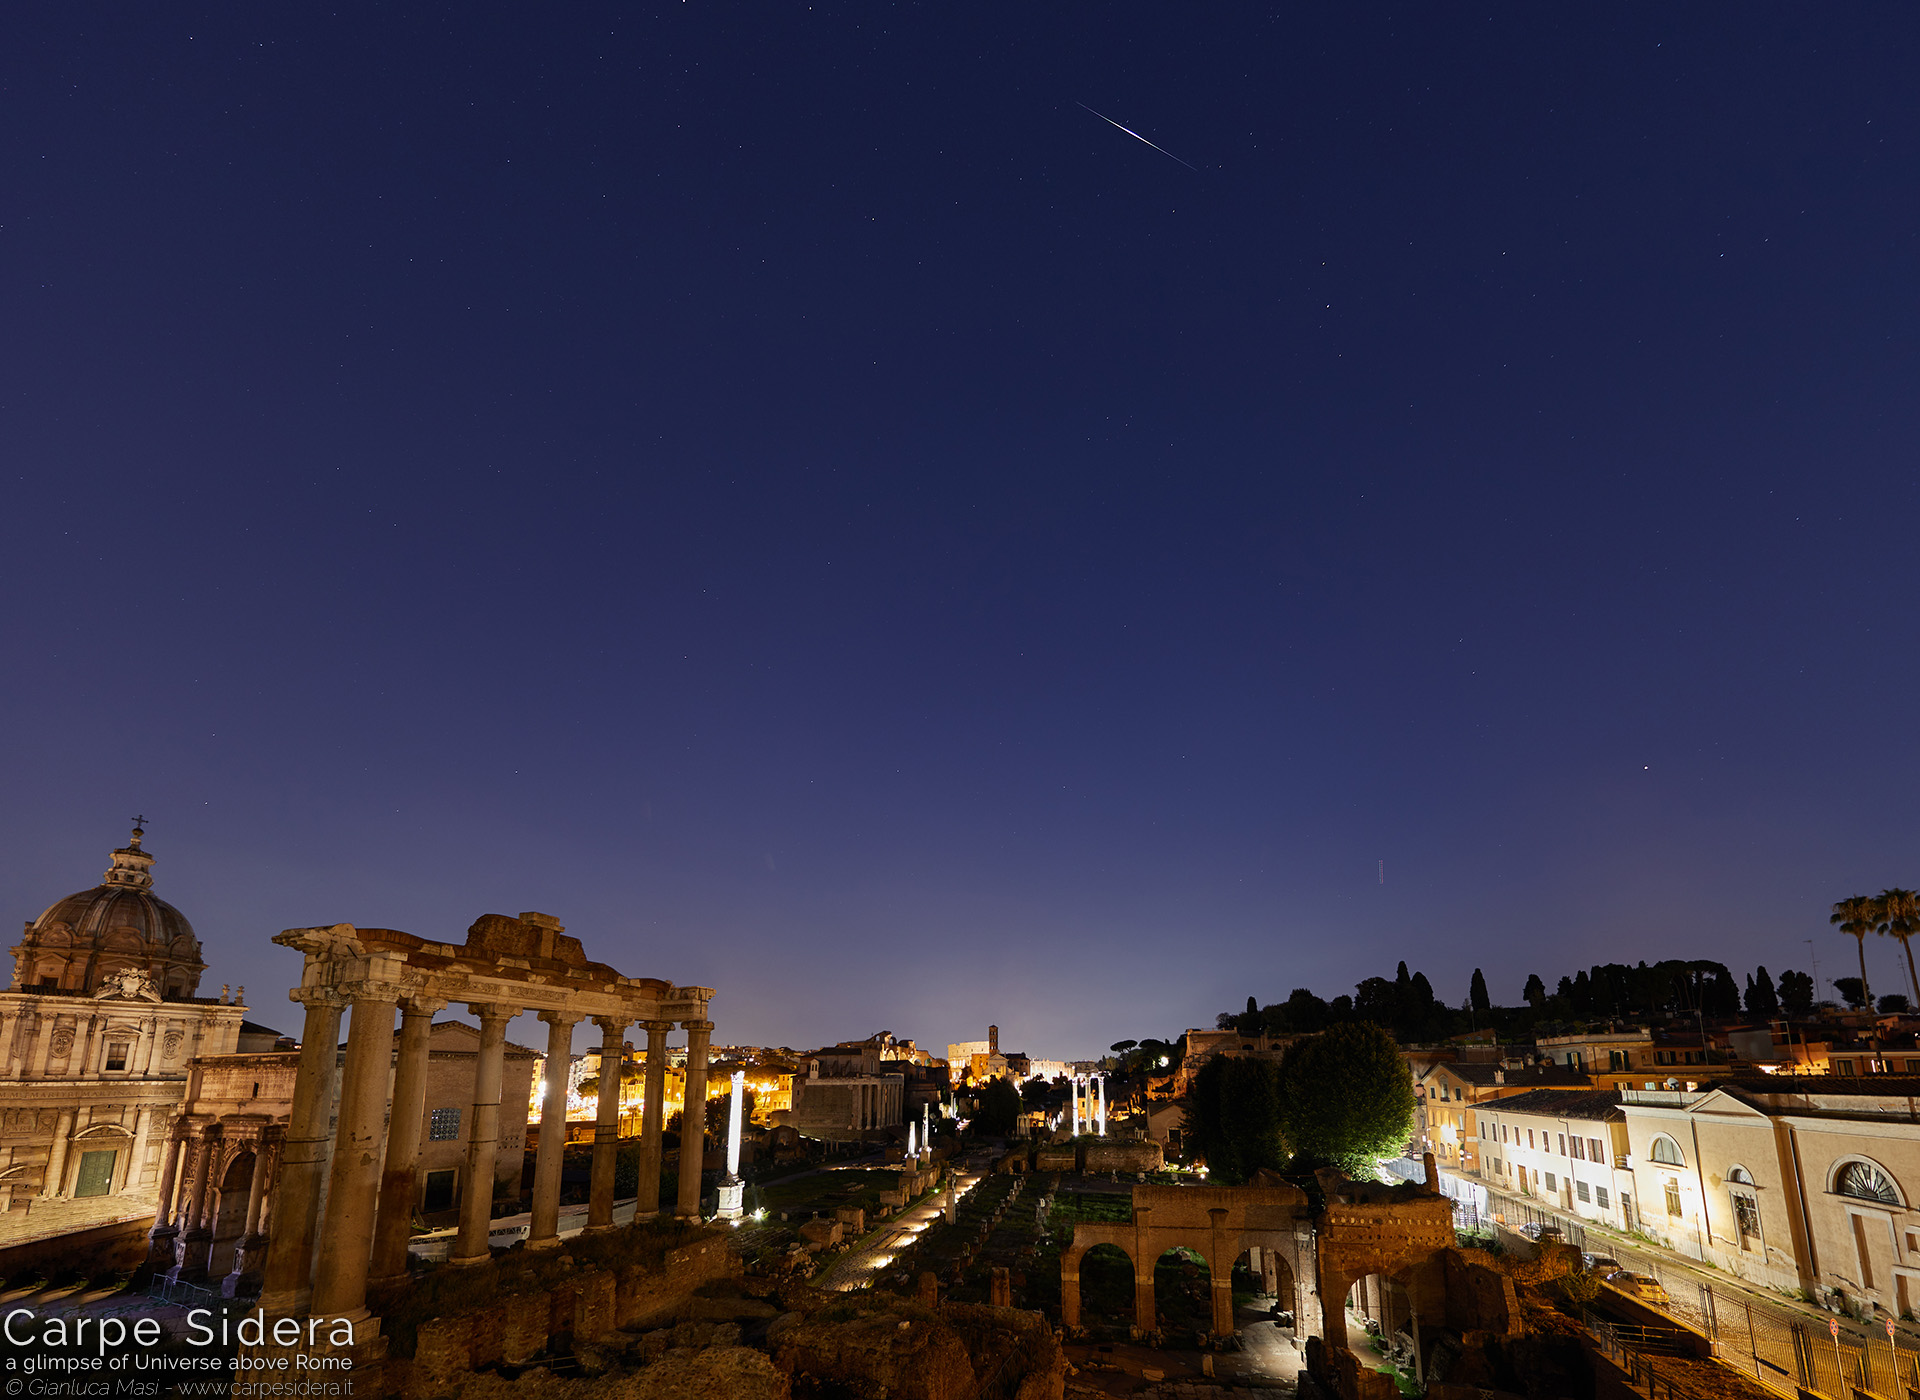 25. The Iridium 45 satellite shines above the Roman Forum.